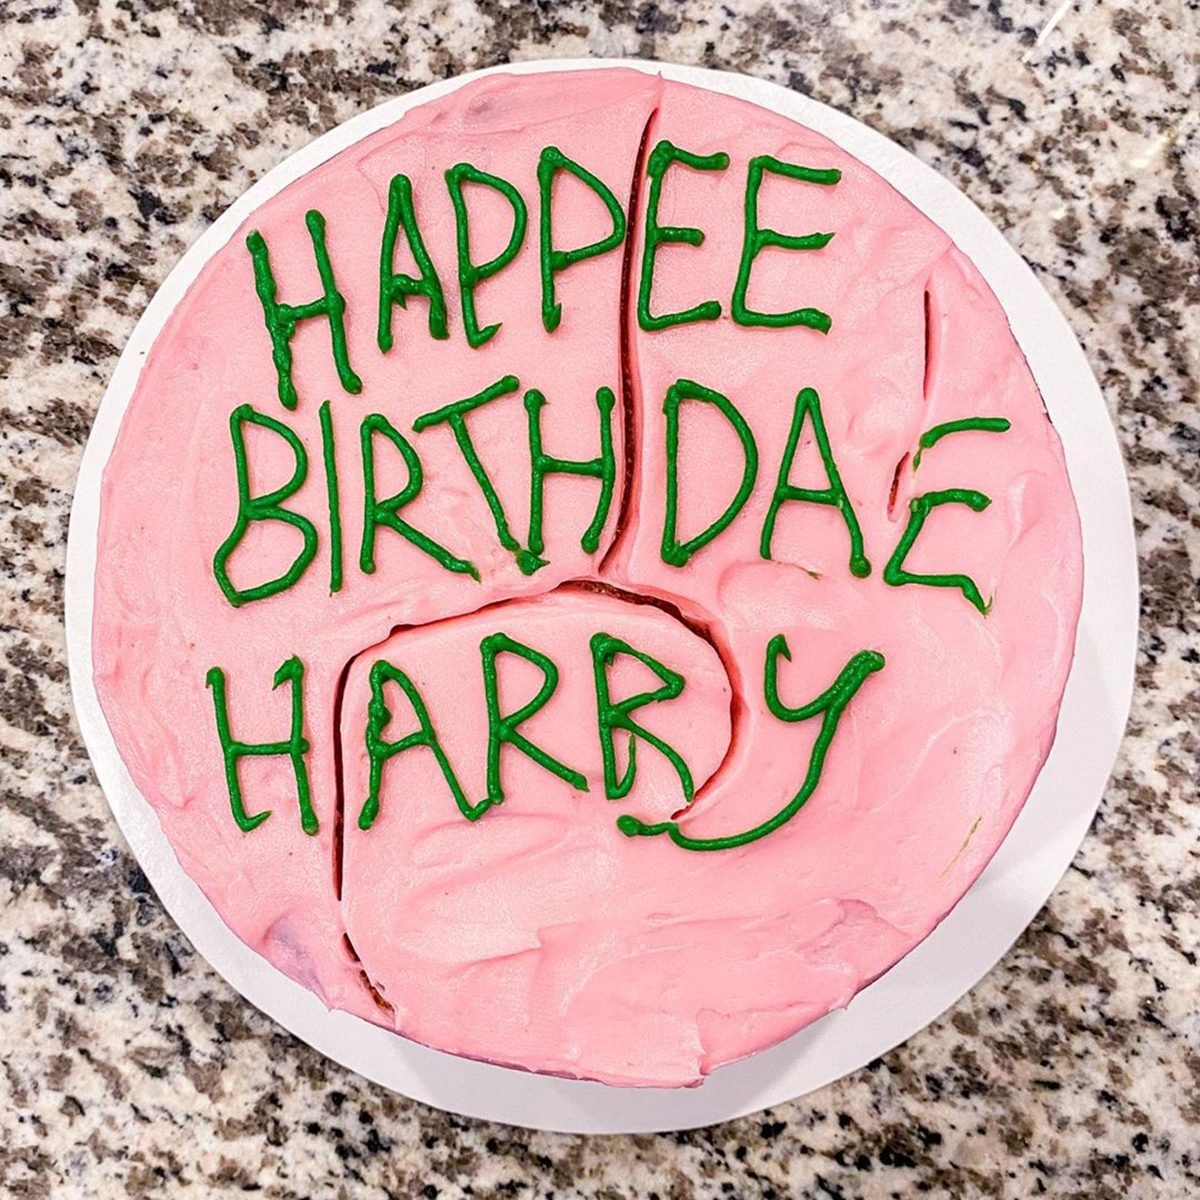 https://www.tasteofhome.com/wp-content/uploads/2019/11/Harry-potter-birthday-party-cake-.jpg?fit=680%2C680